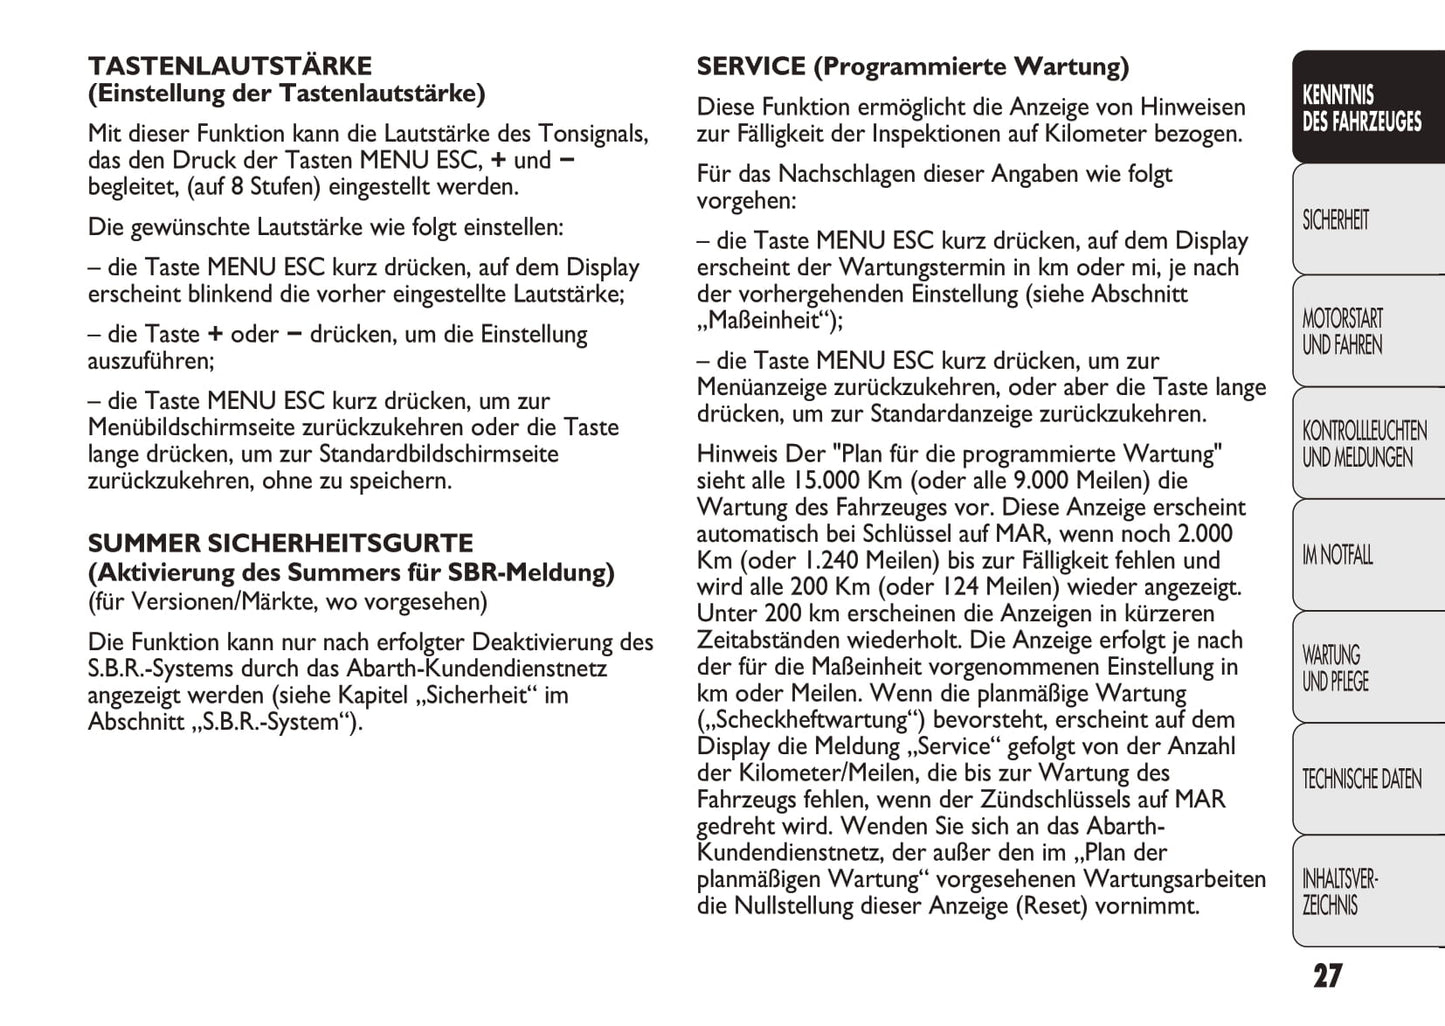 2010-2014 Abarth Punto Evo Owner's Manual | German